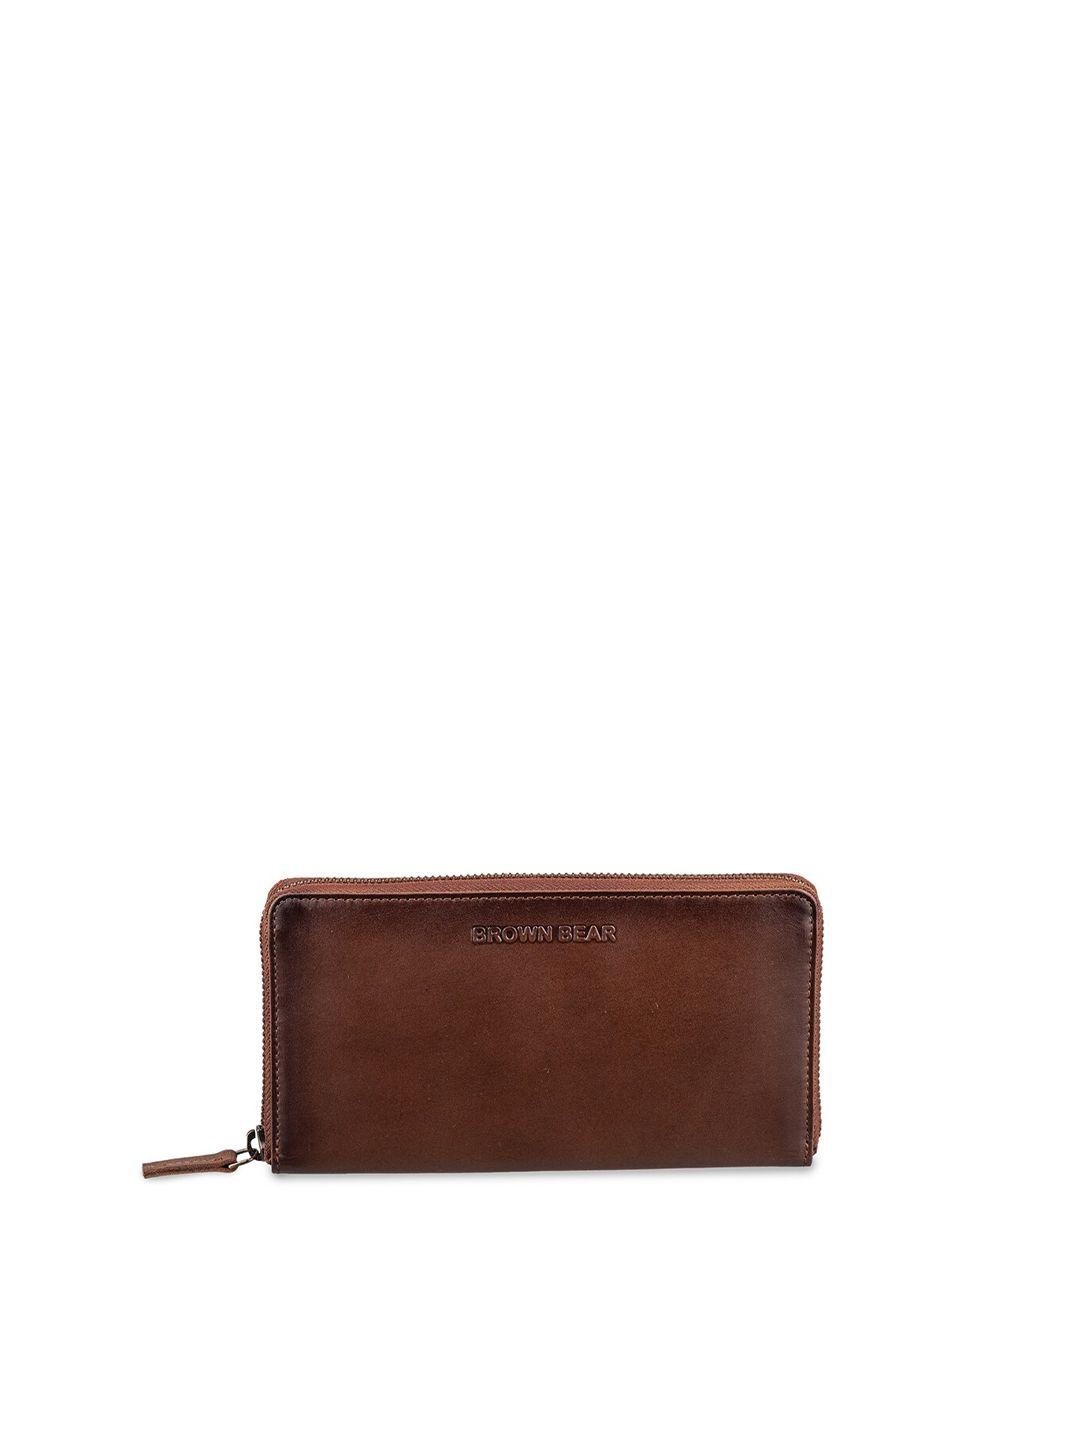 brown bear women leather zip around wallet with rfid